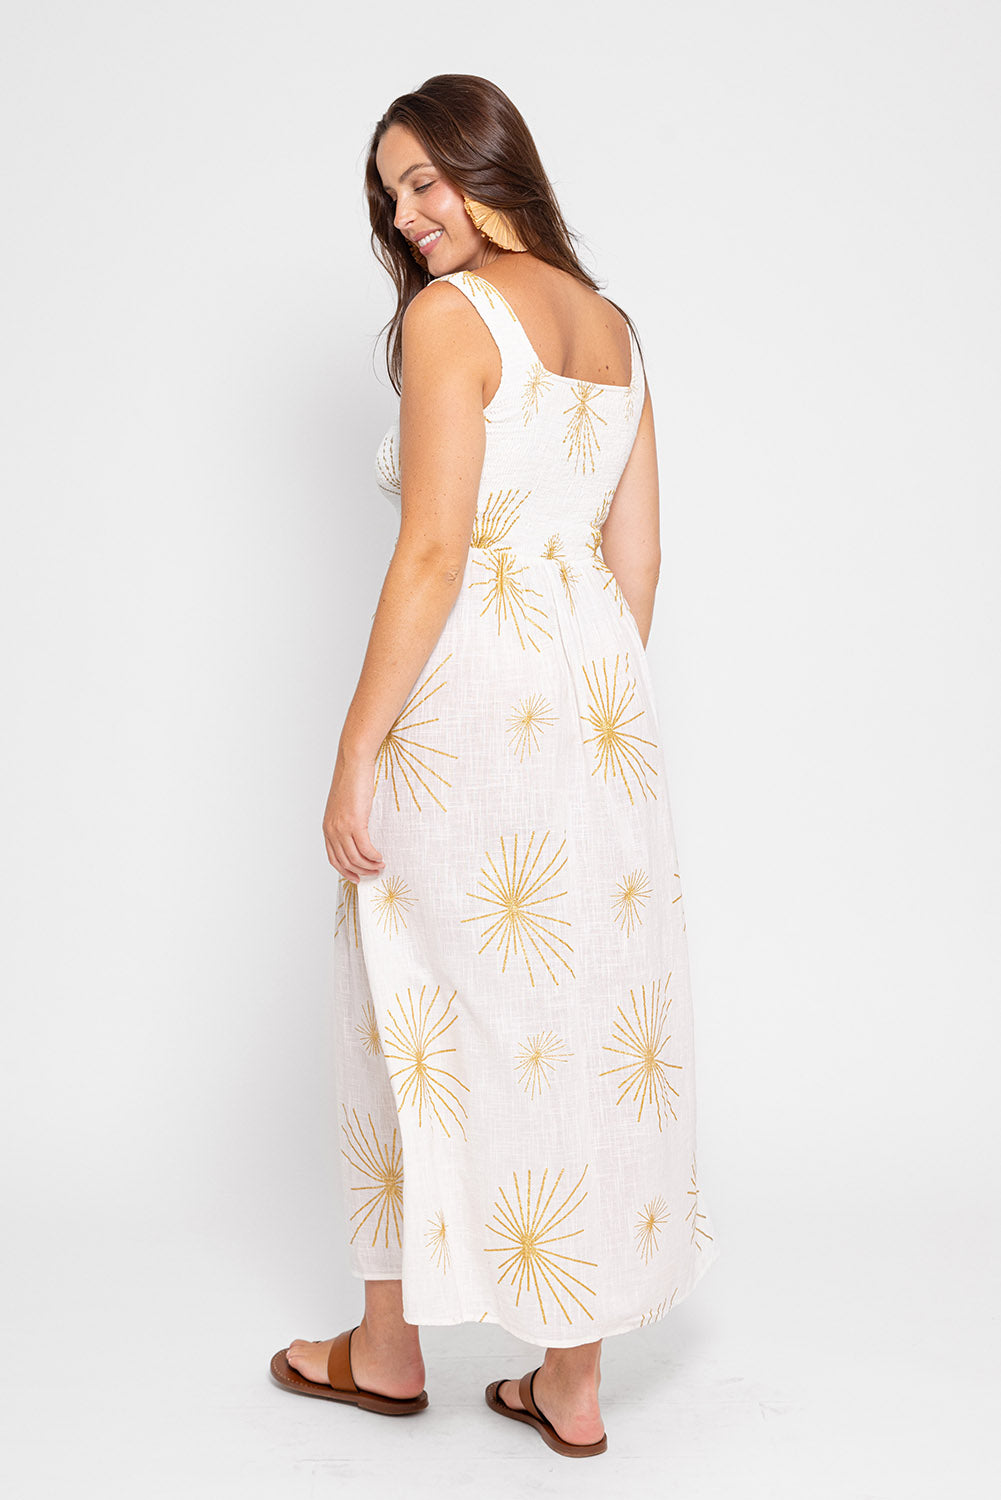 Amande sevilla - white & gold Dresses SUNDRESS